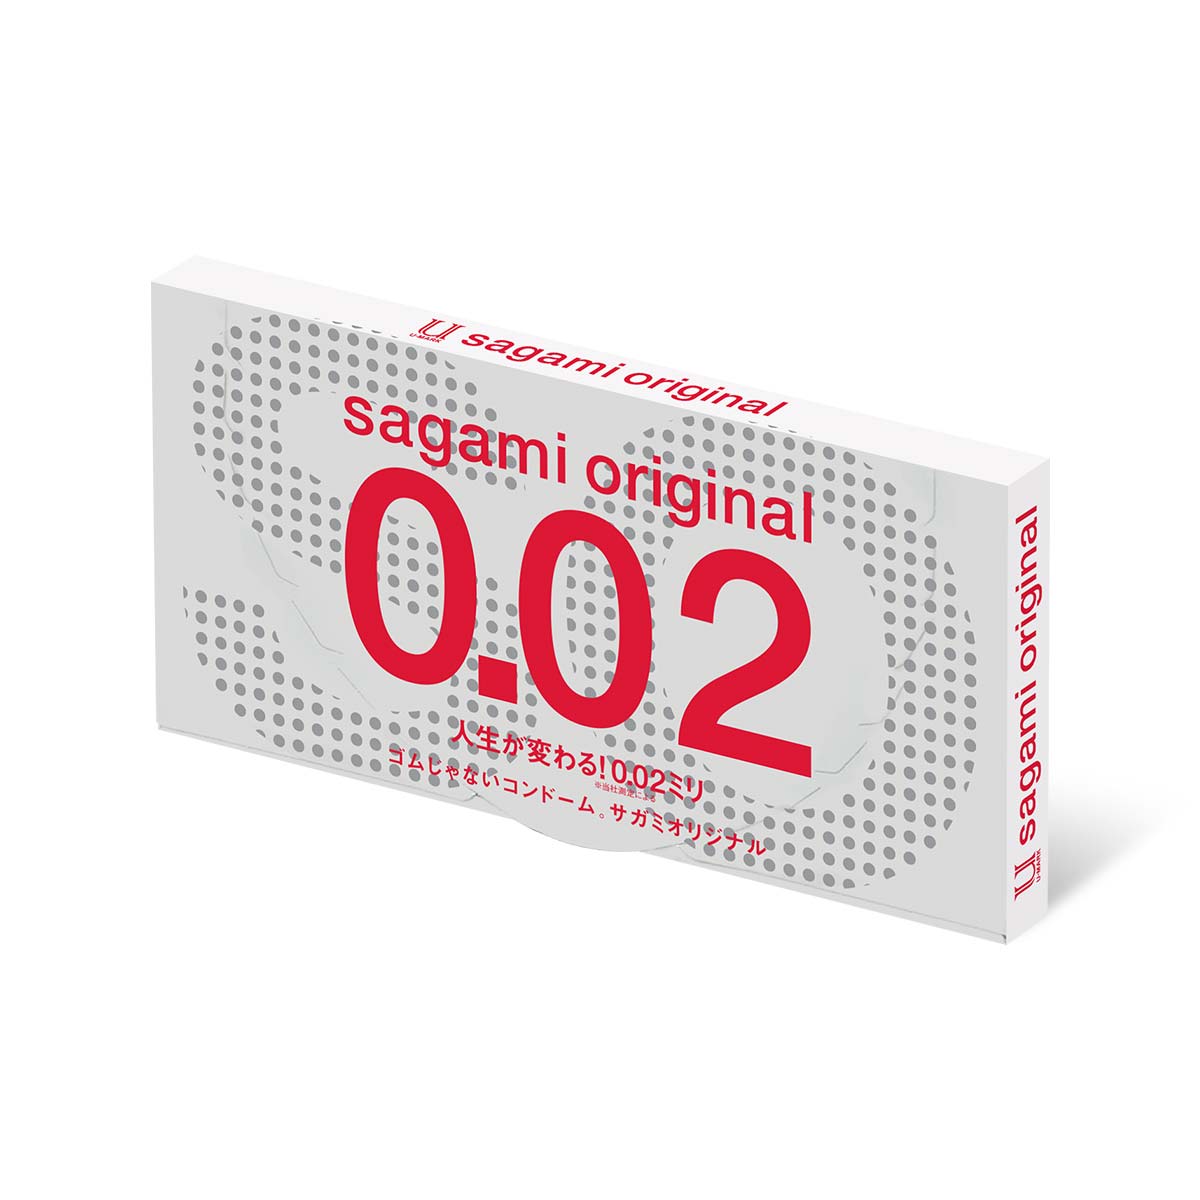 Sagami Original 0.02 2's Pack PU Condom-thumb_1